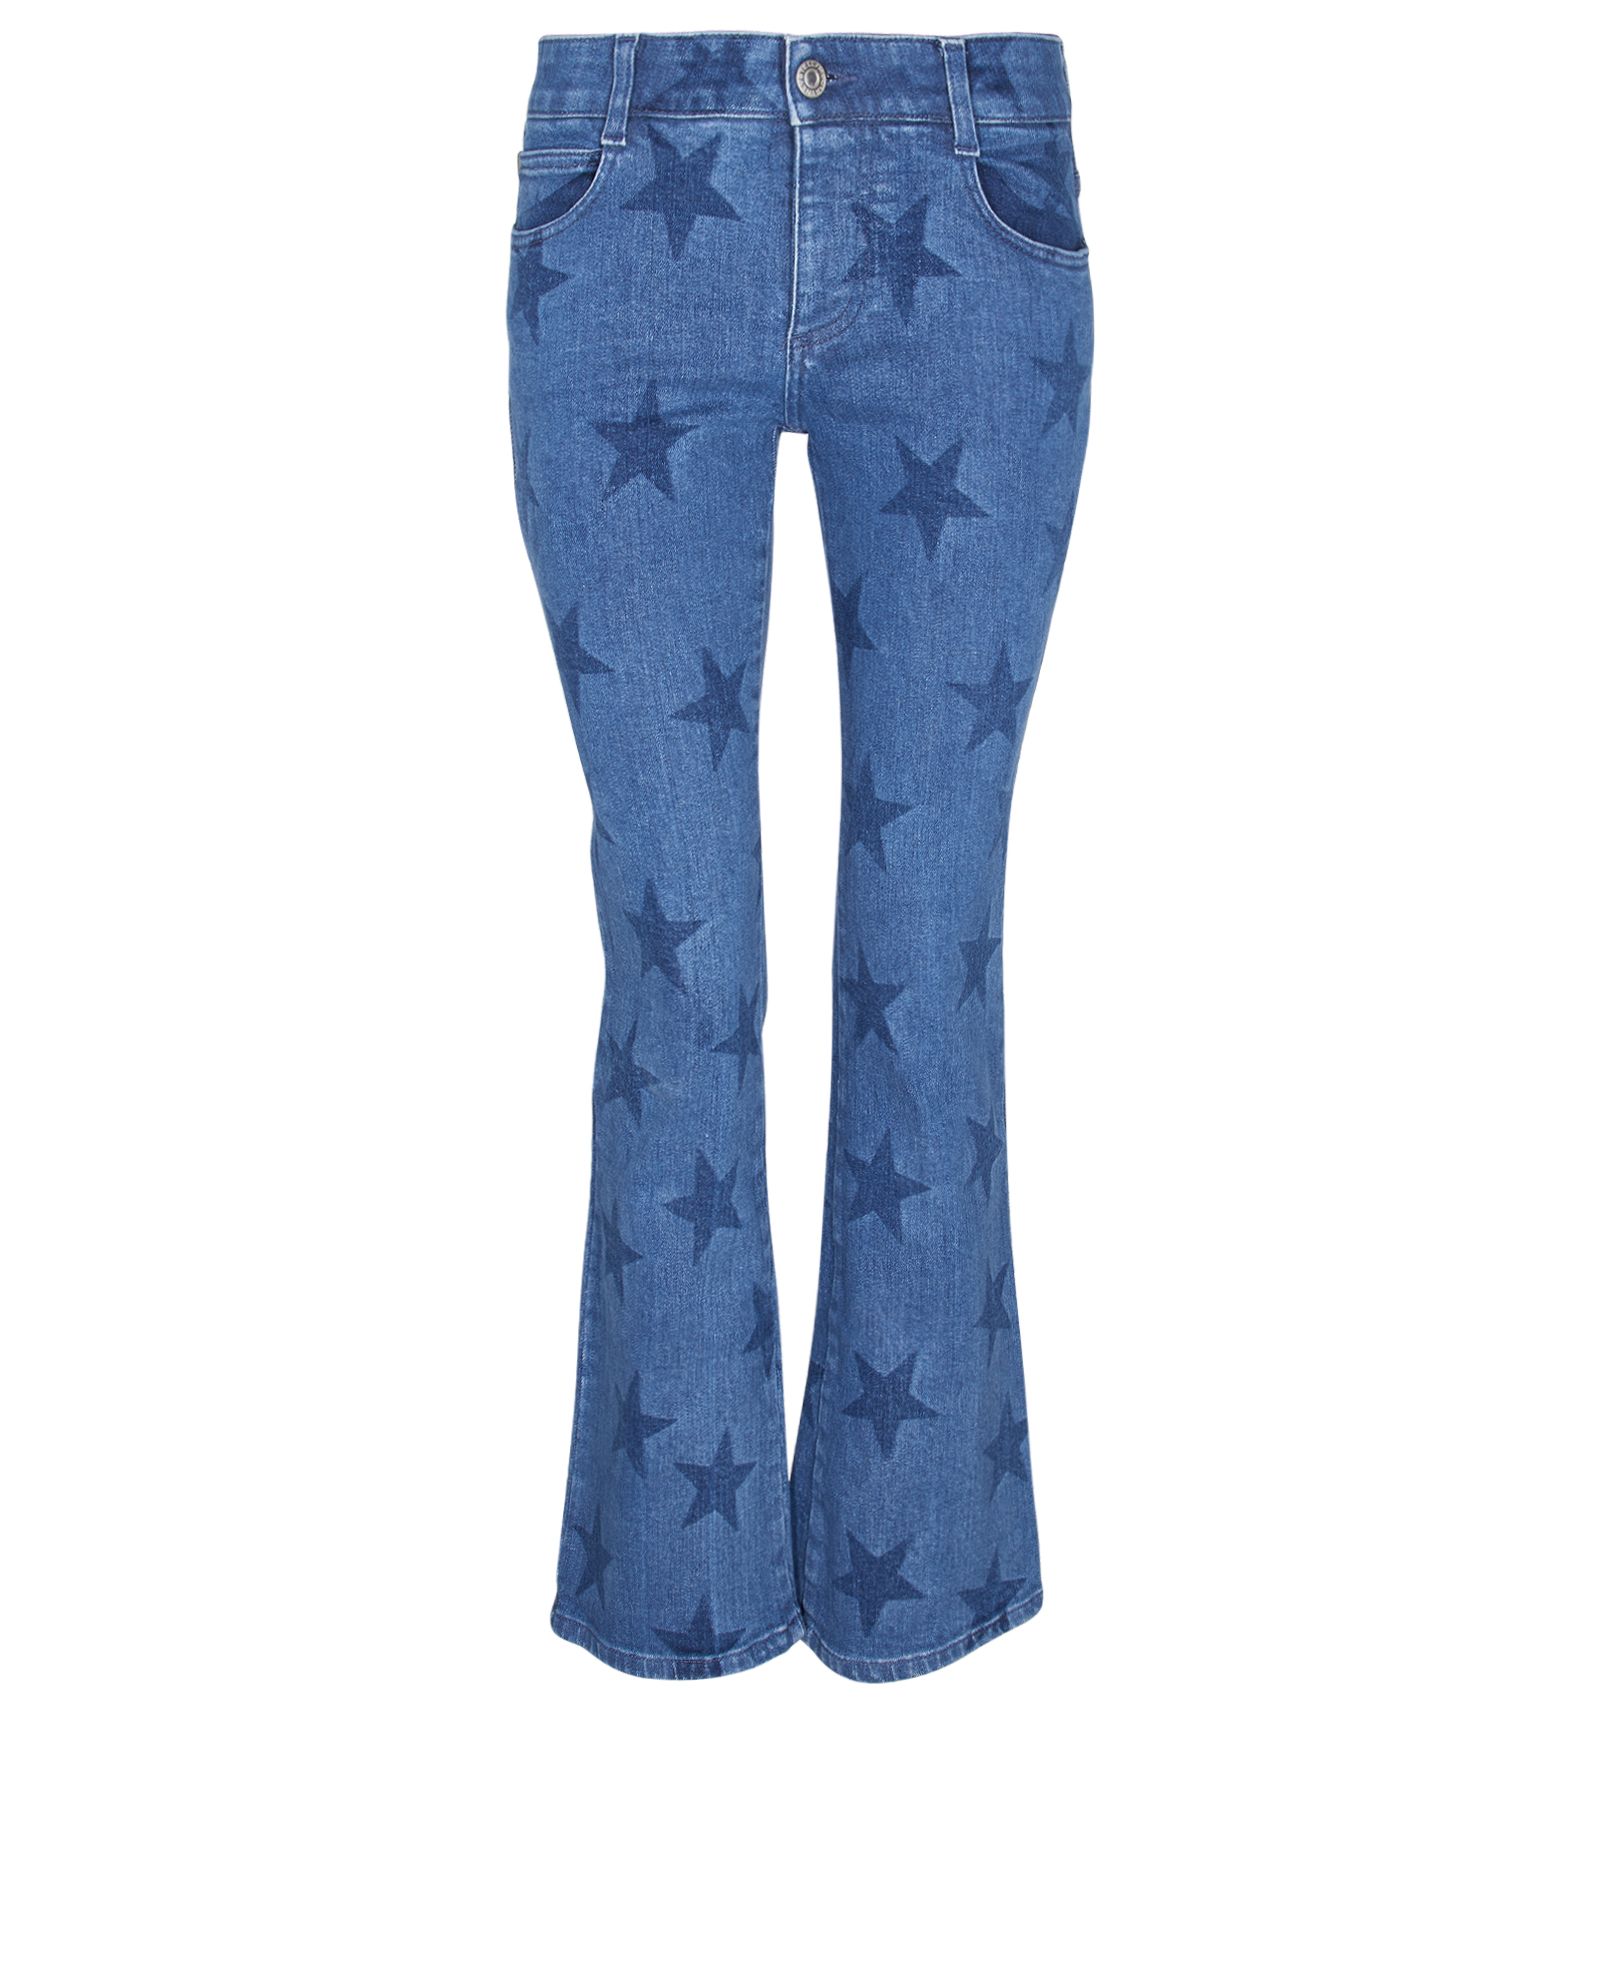 Stella Mccartney star printed jeans, Women's Fashion, Bottoms